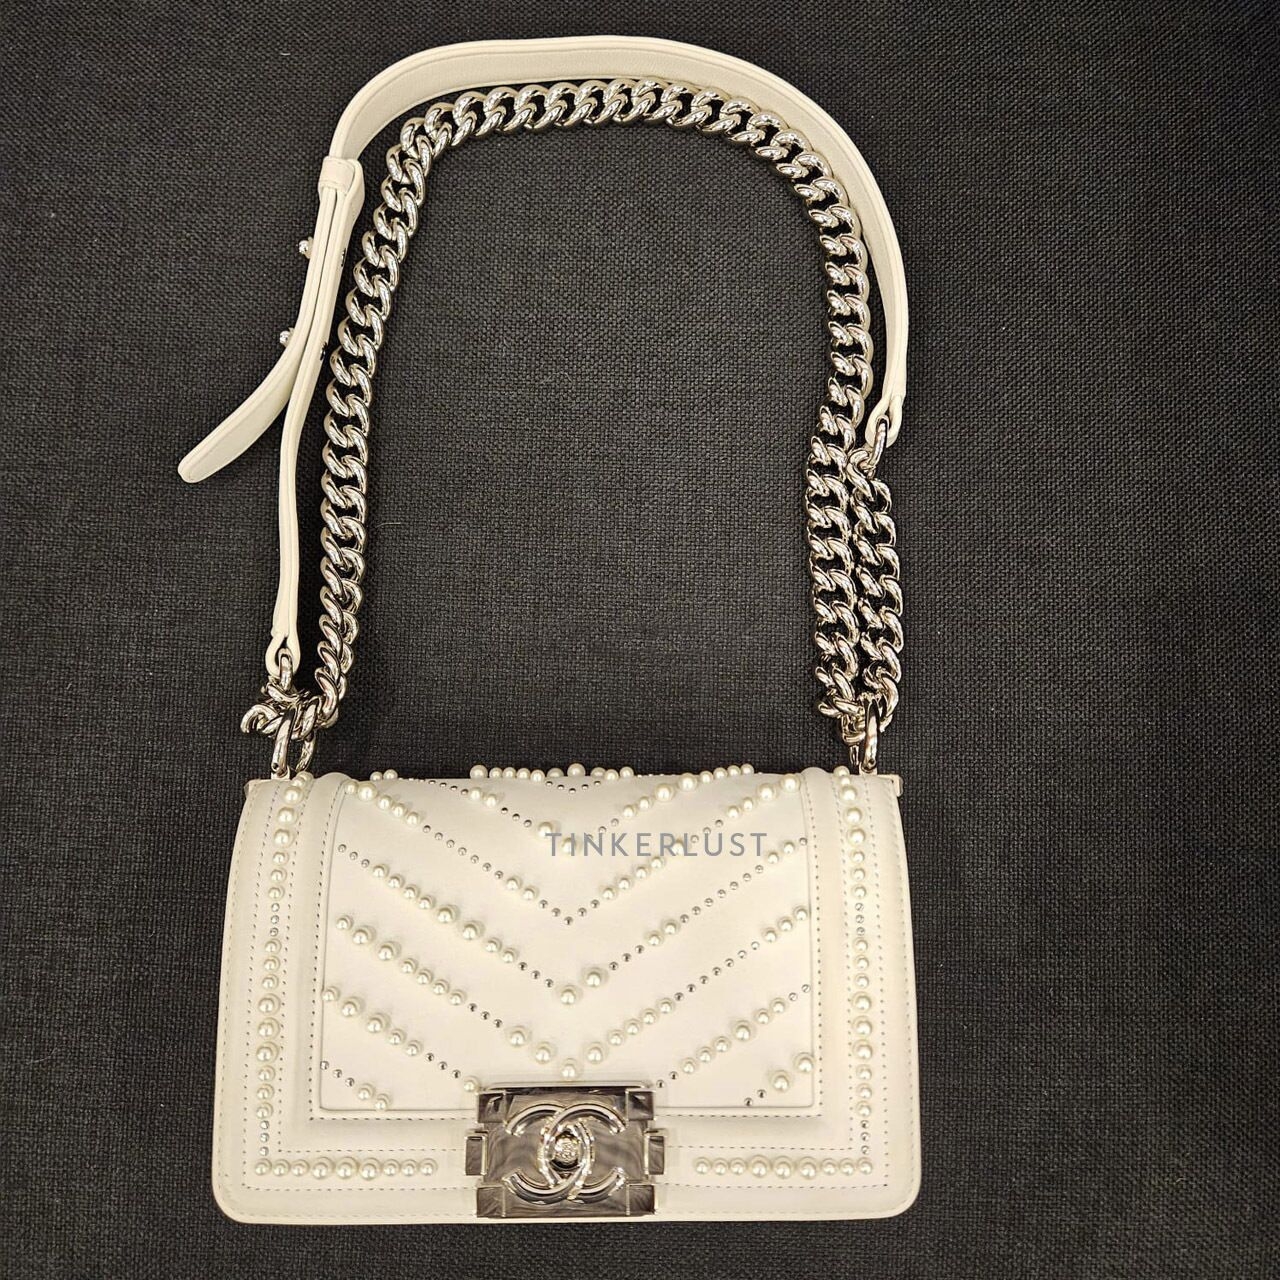 Chanel Boy Small Pearls Broken White Chevron #29 Shoulder Bag